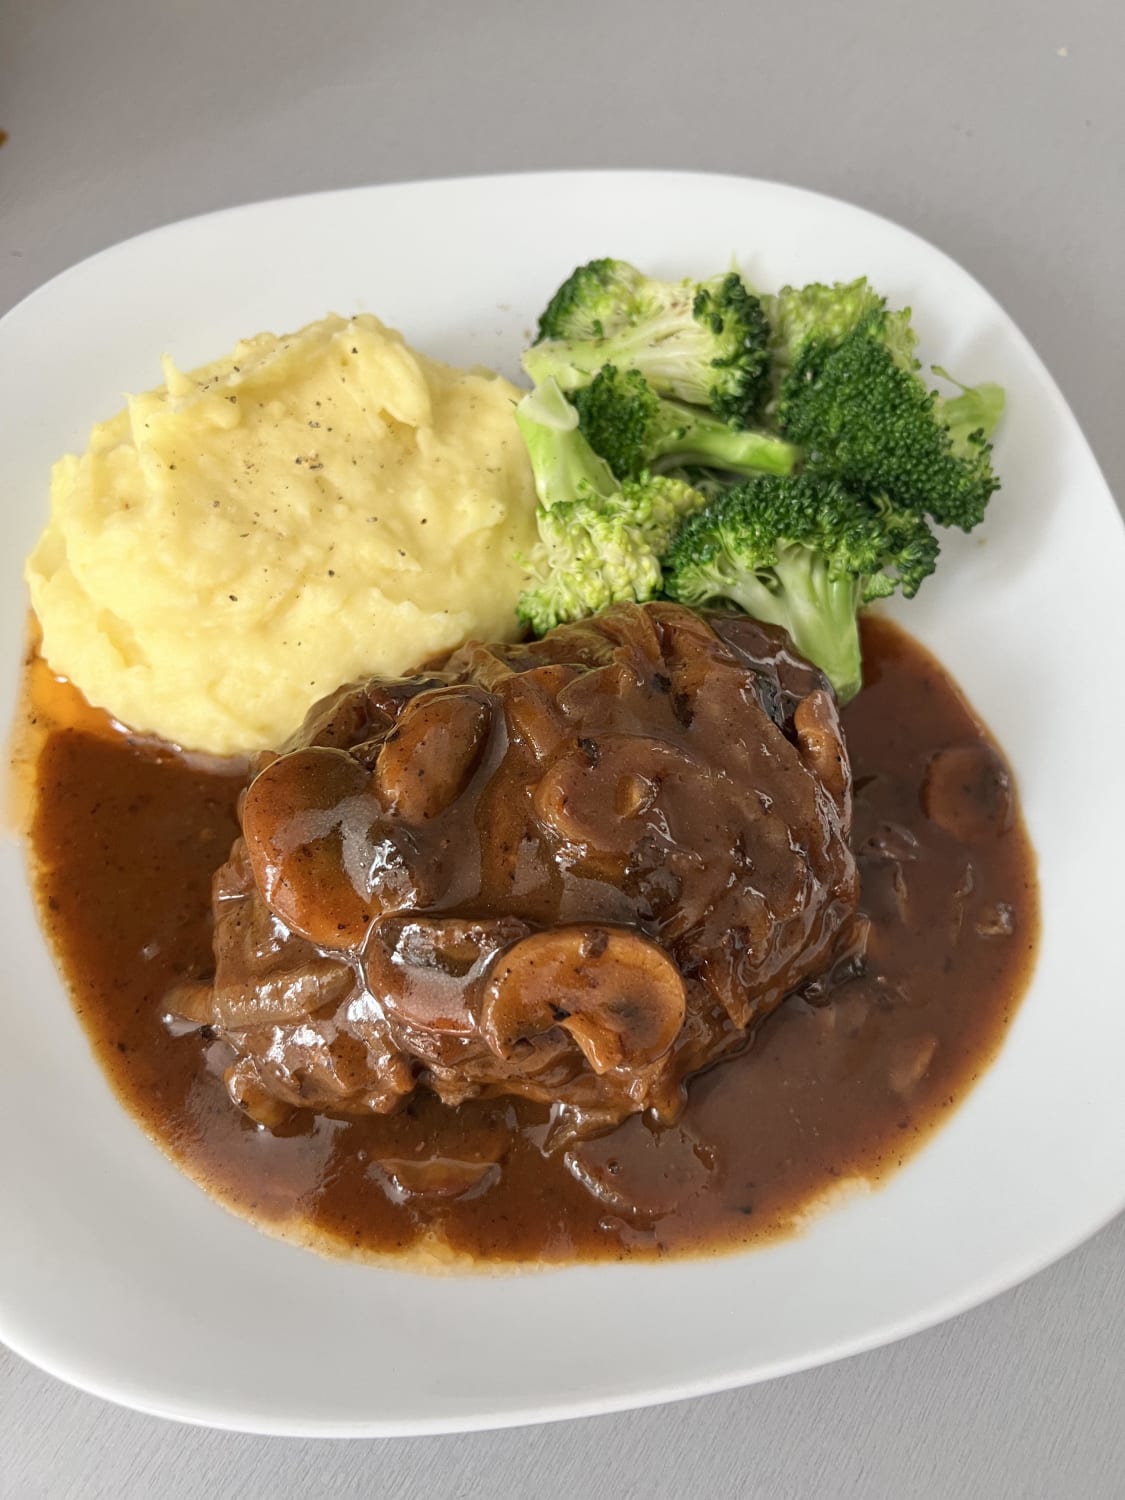 [homemade] Salisbury steak with mushroom gravy, mashed potatoes and steamed broccoli